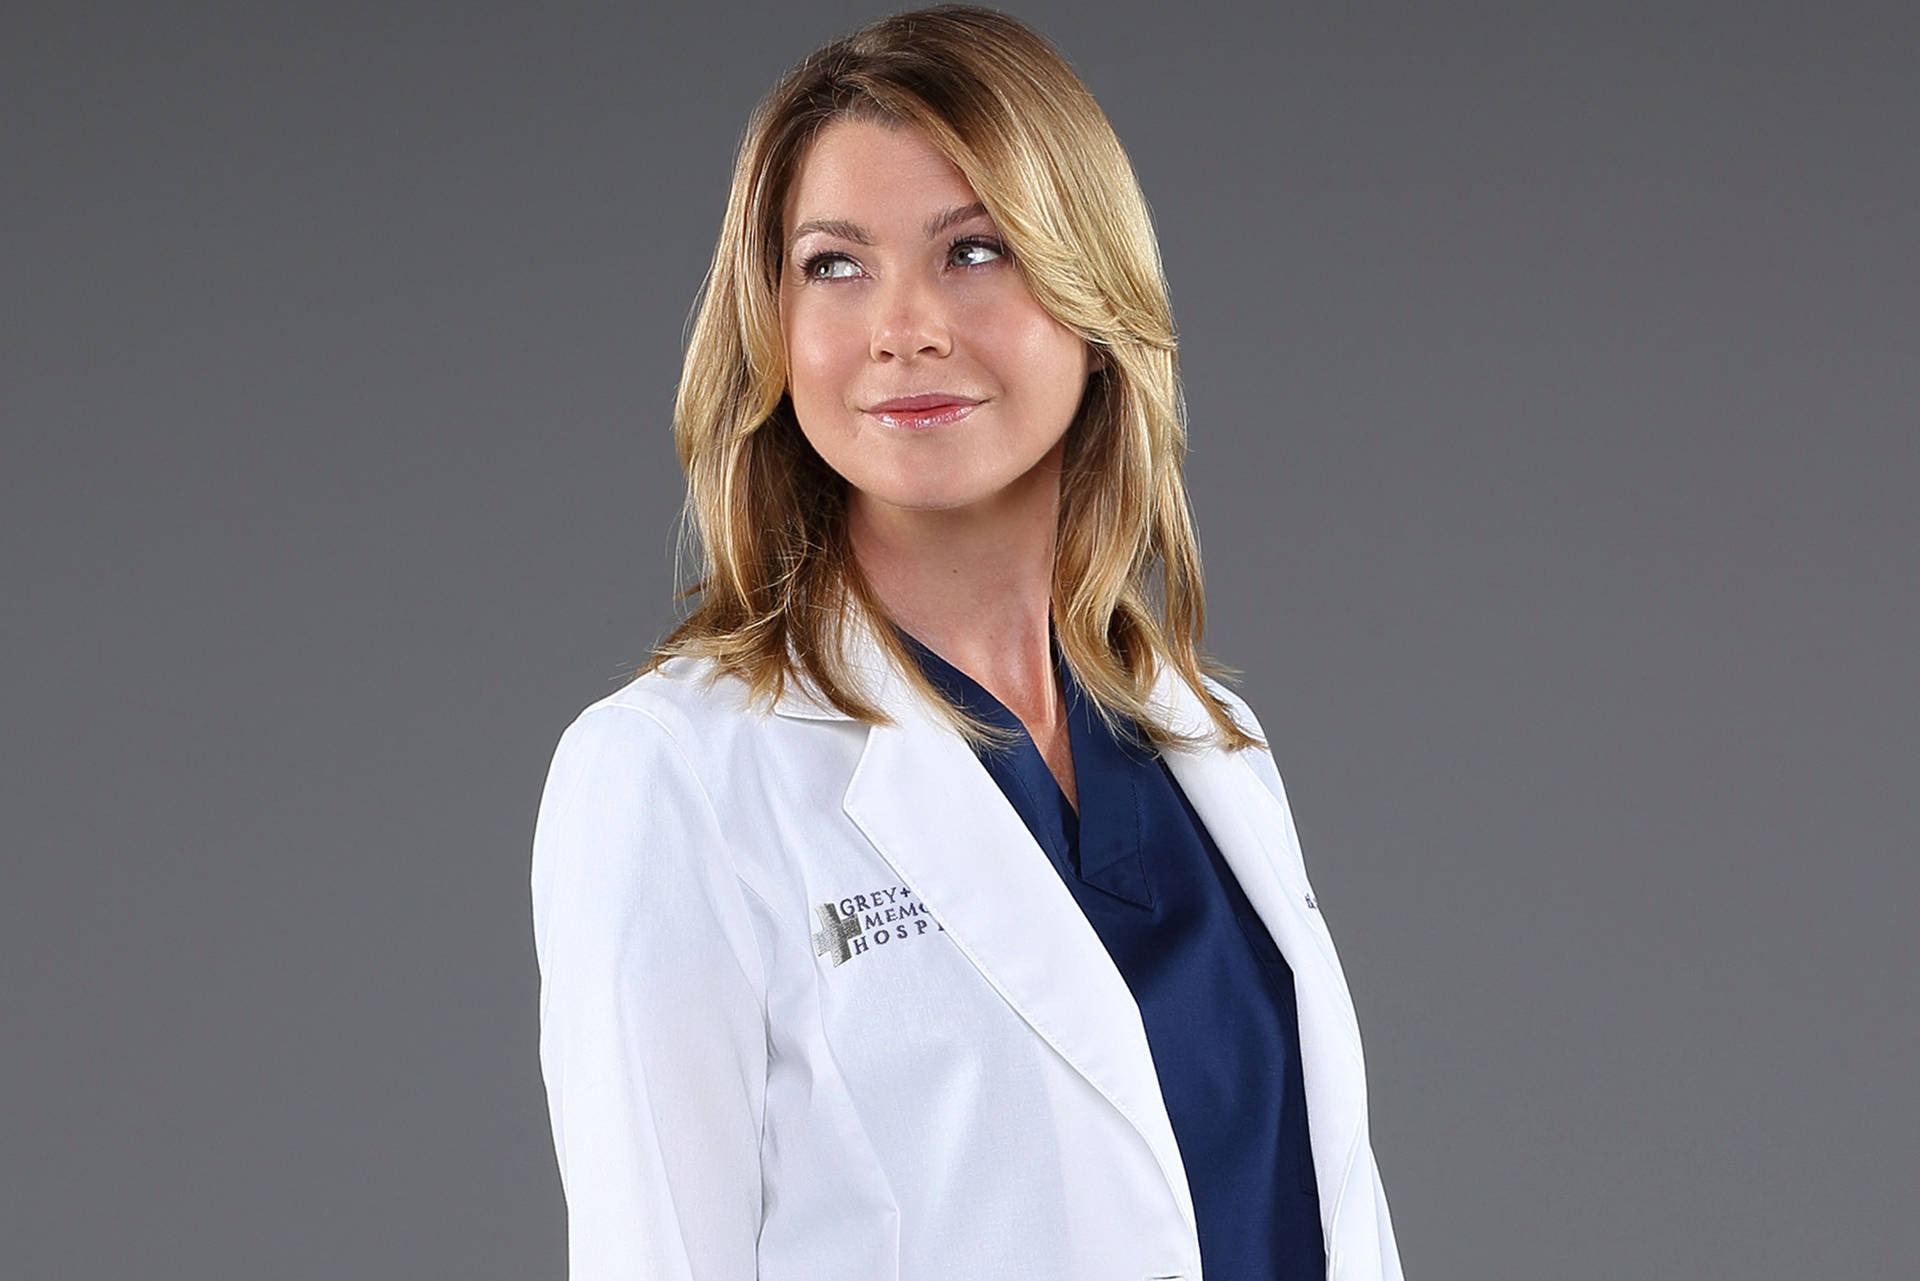 Grey's Anatomy Meredith Grey Wallpaper